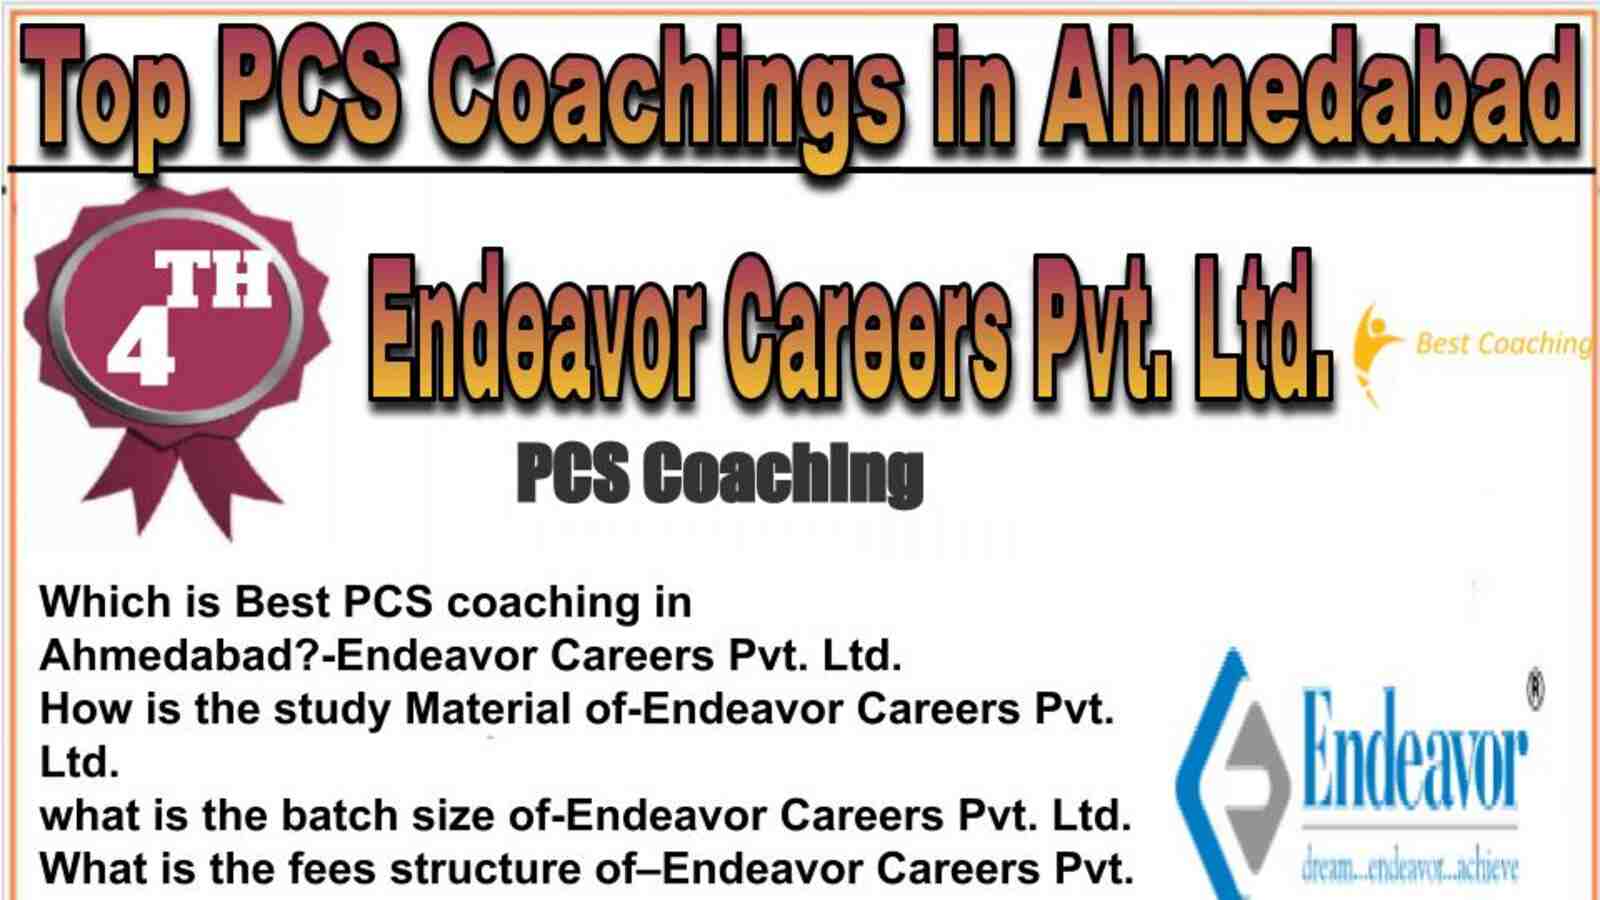 Rank 4 top PCS coachings in Ahmedabad